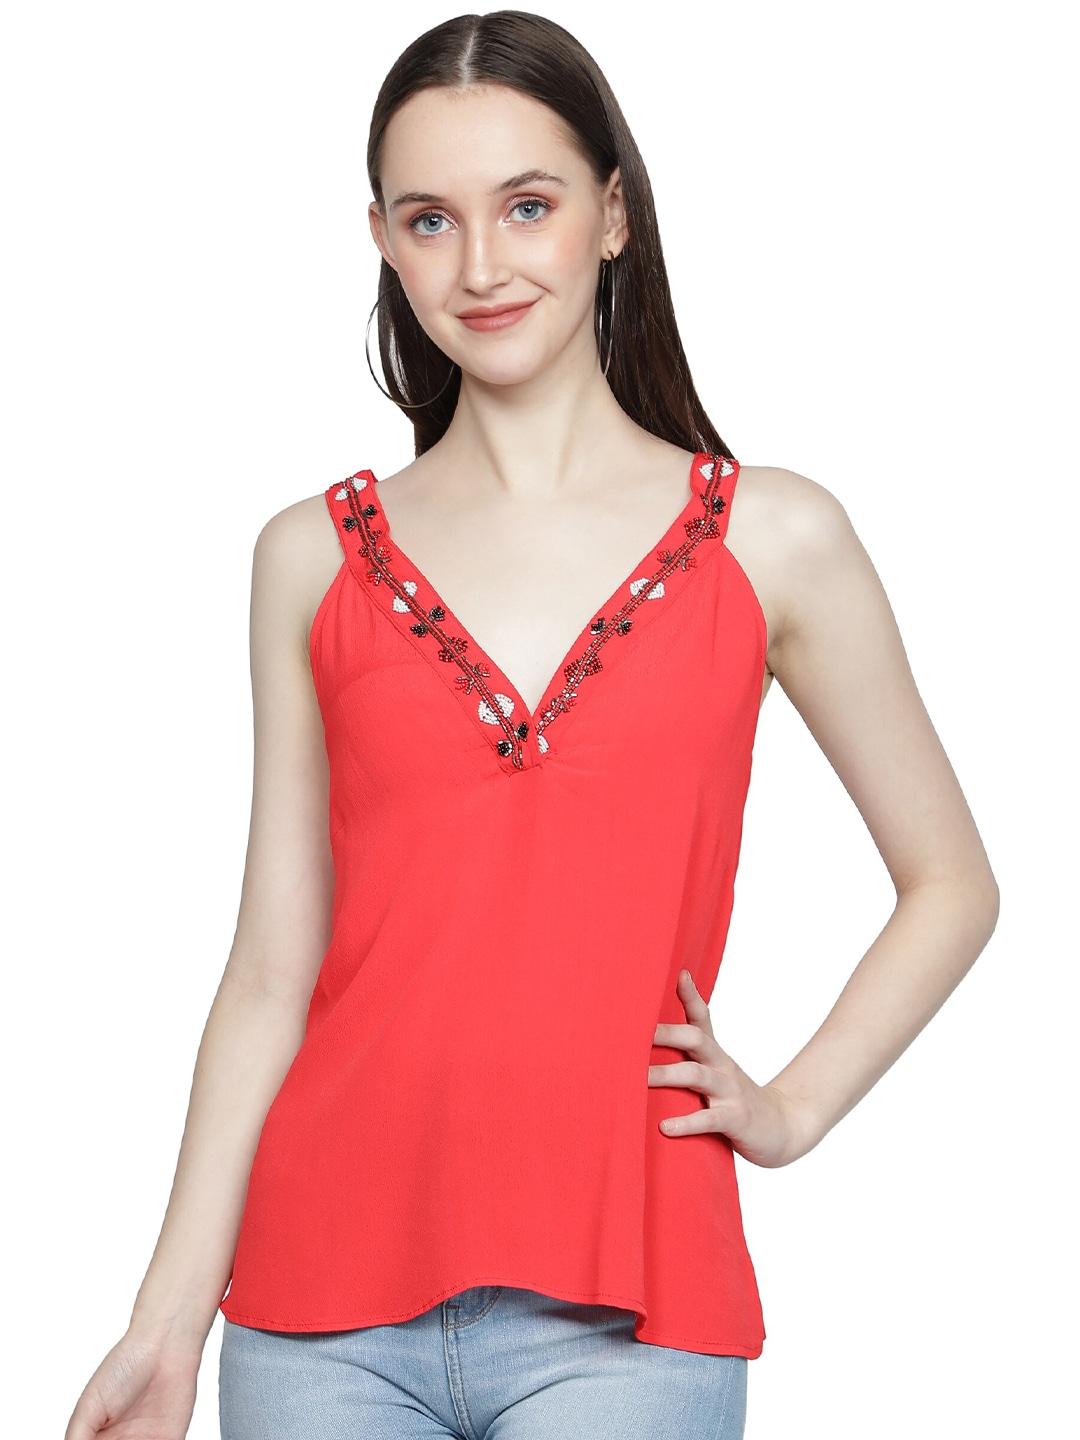 nuevosdamas-women-red-solid-sleeveless-top